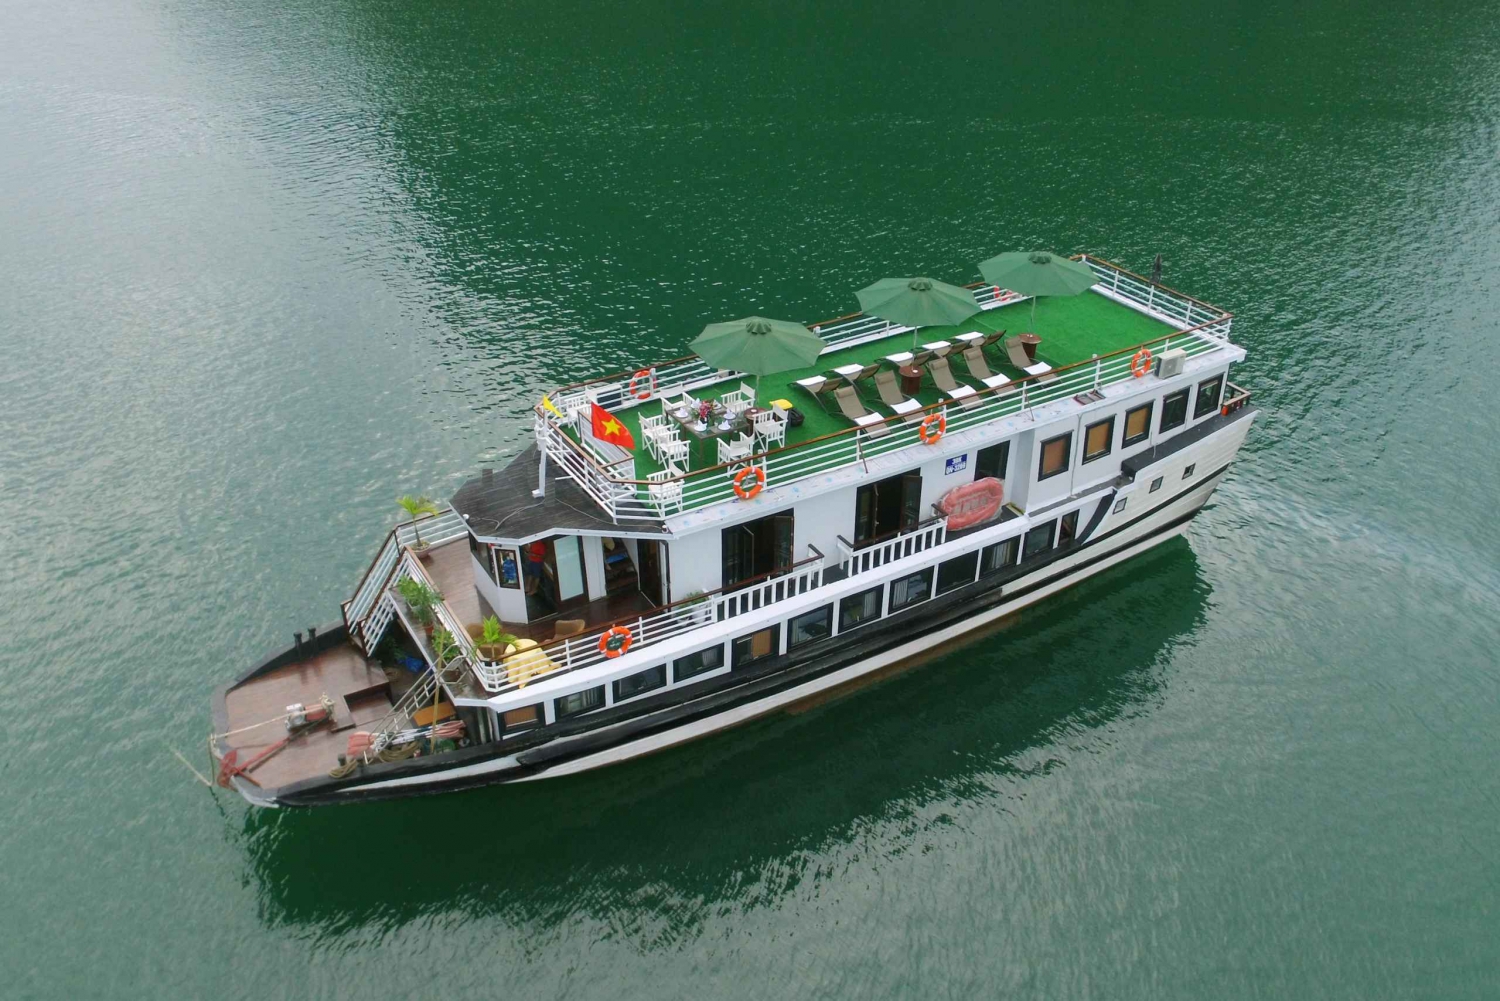 Hanoi: 2-Day Ha Long Bay 5-Star Cruise Tour with Activities